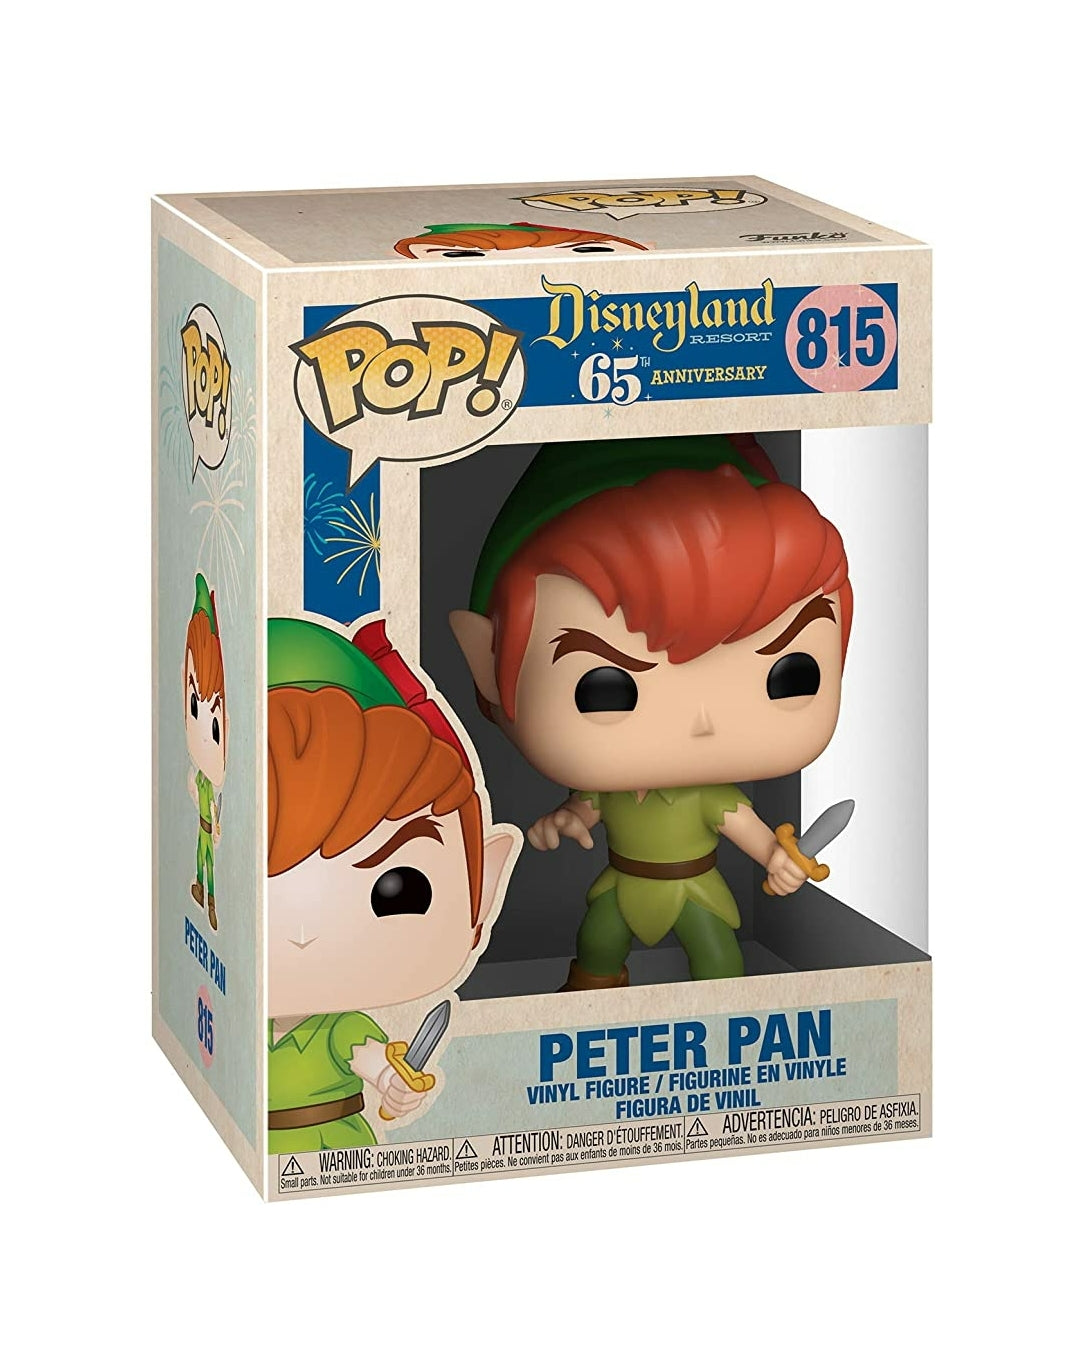 Disneyland 65th Anniversary Peter Pan Pop! Vinyl Figure